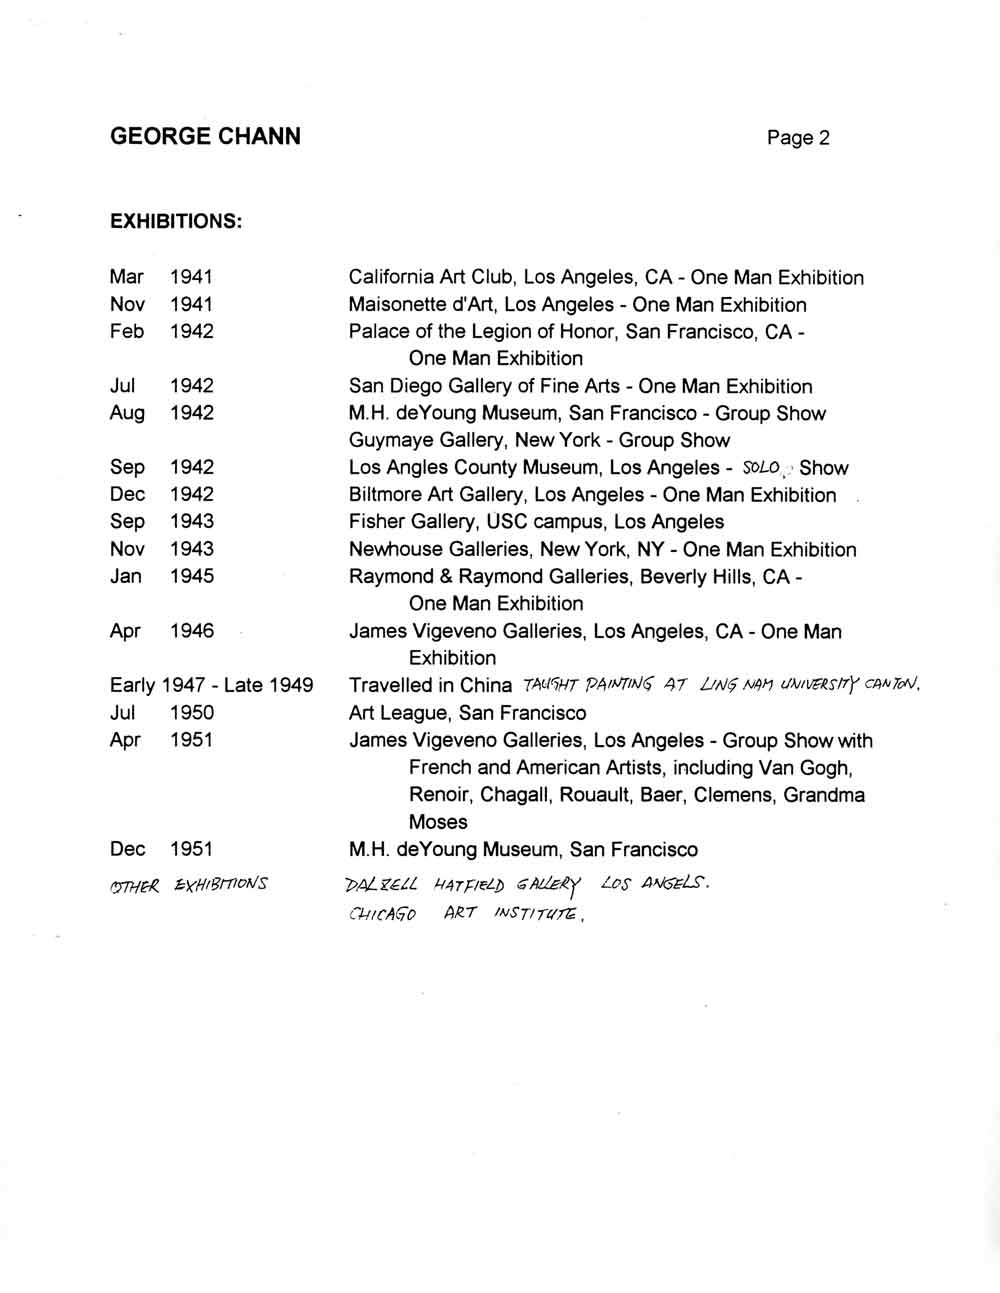 George Chann's Biography/Resume, pg 2